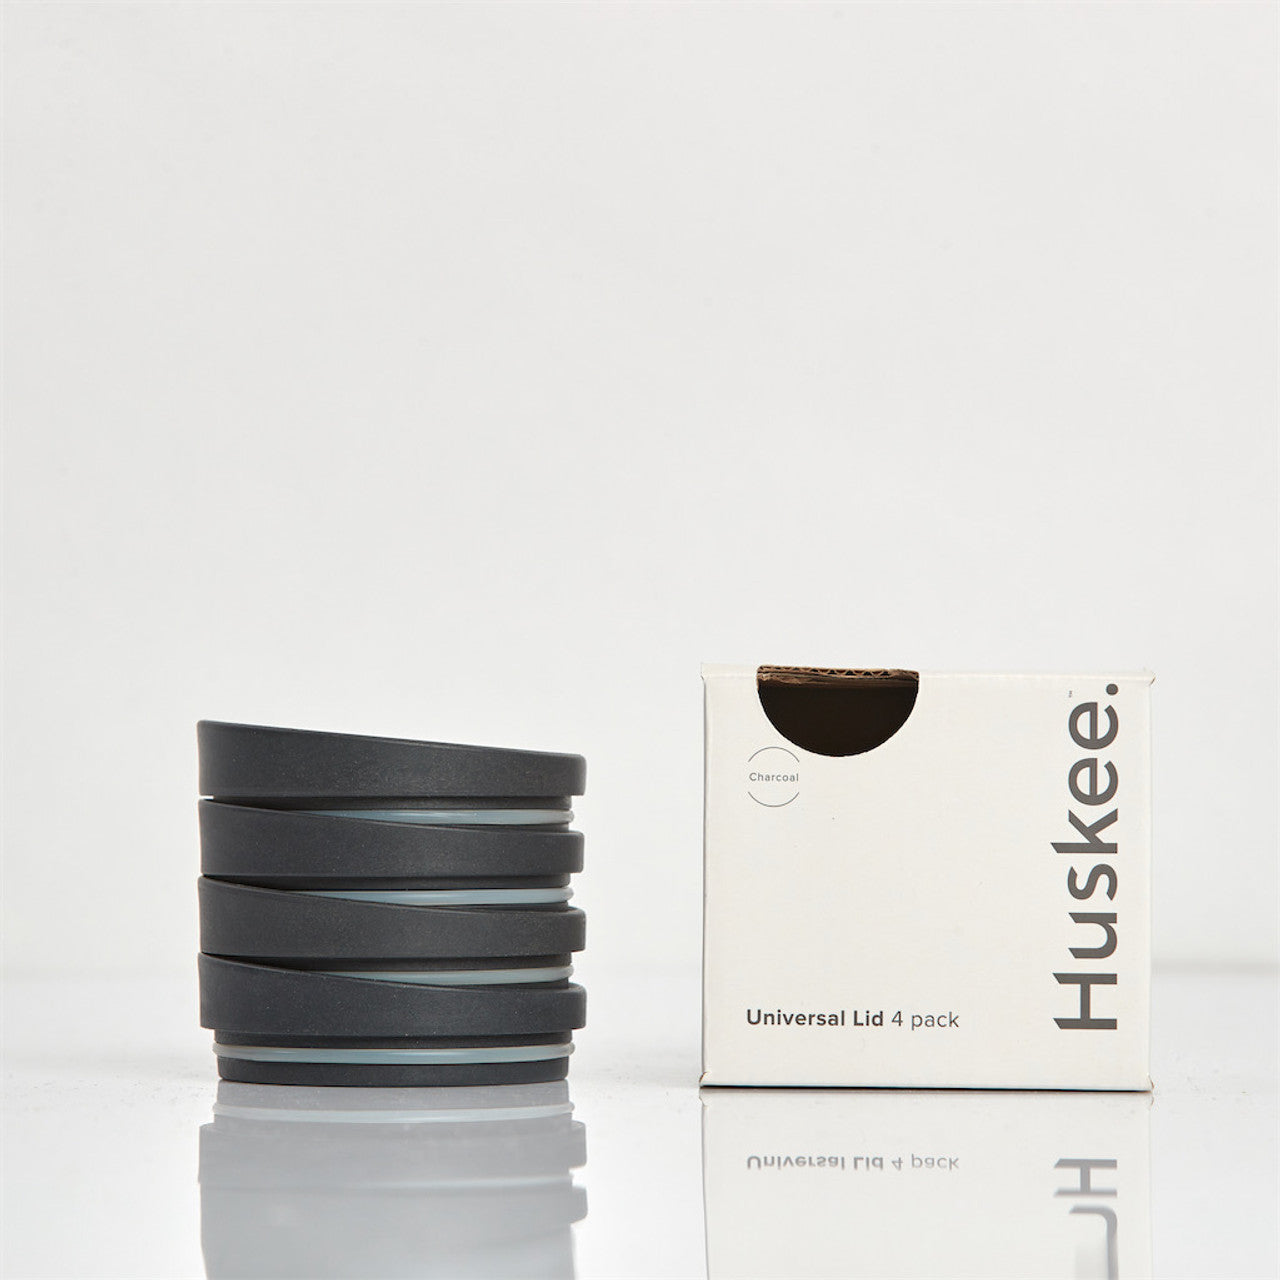 Huskee - Universal Lid 4 pack